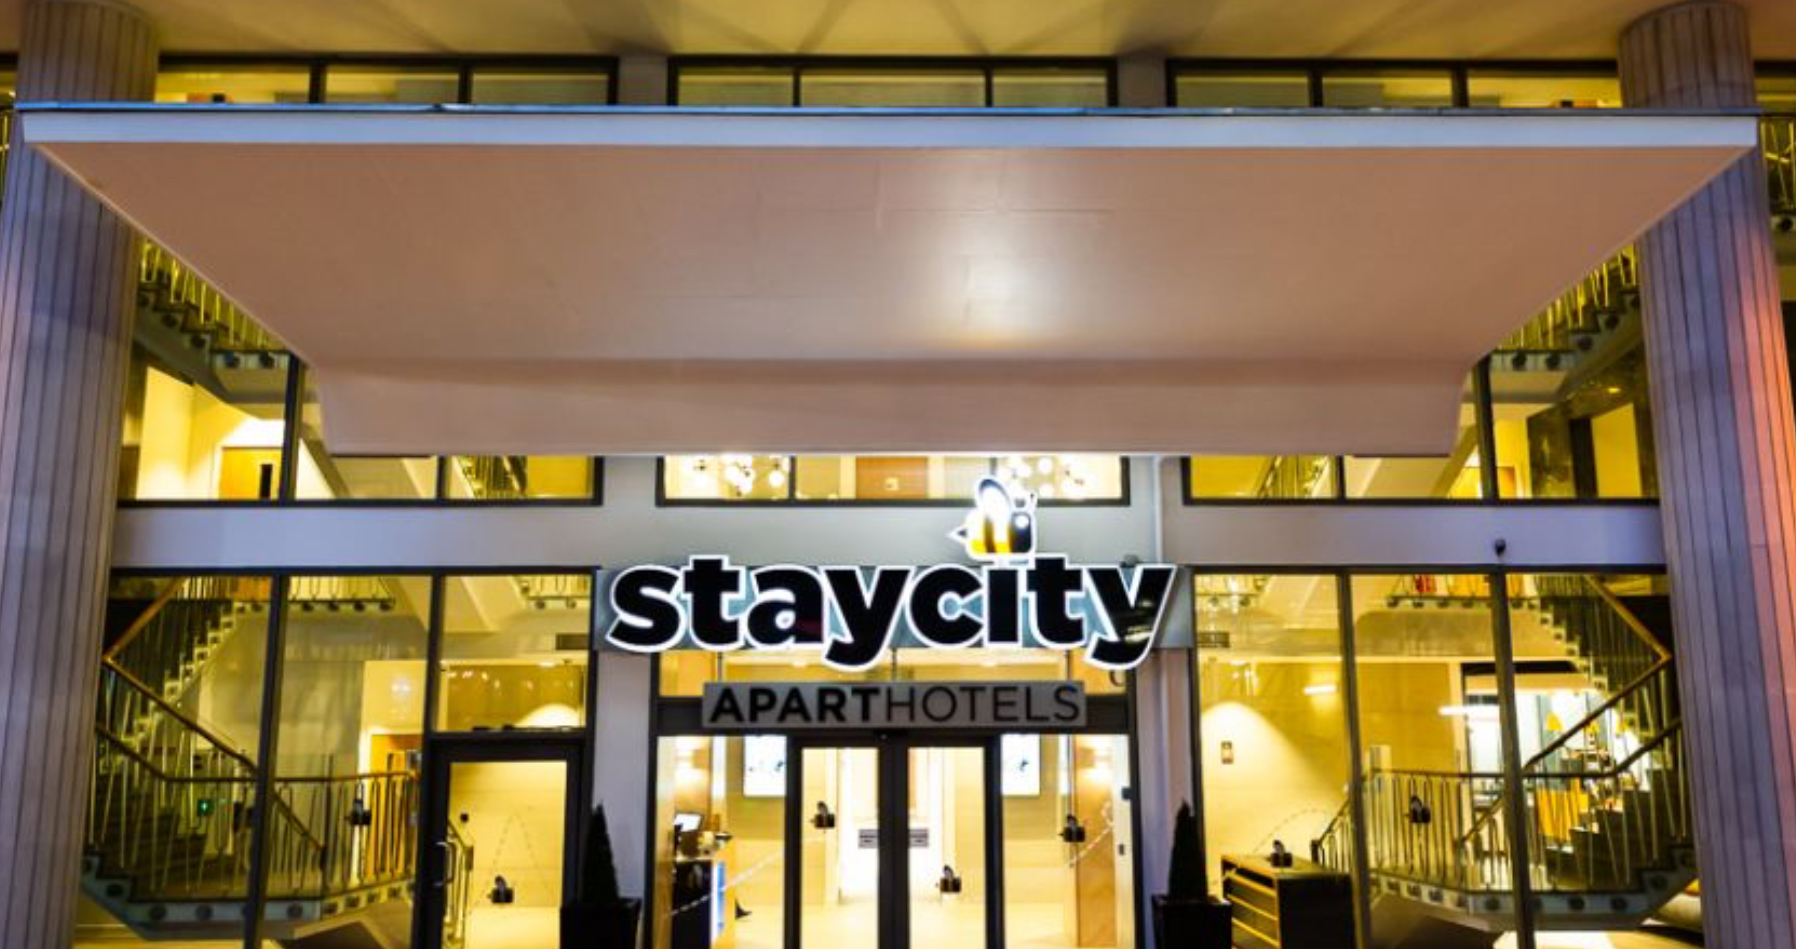 Staycity Aparthotels - Liverpool Waterfront1